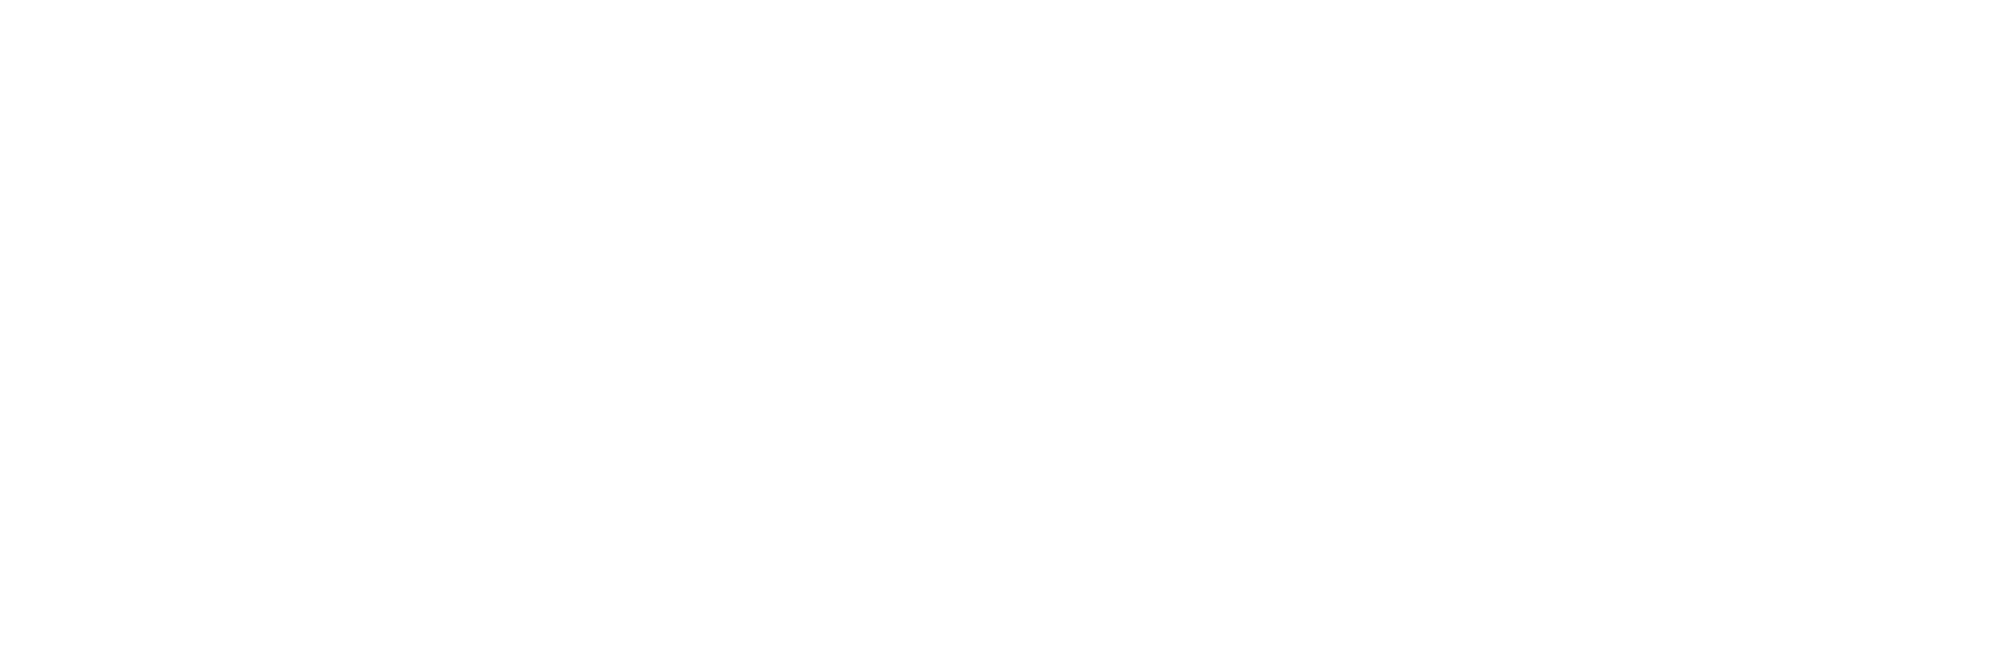 Bomba Group